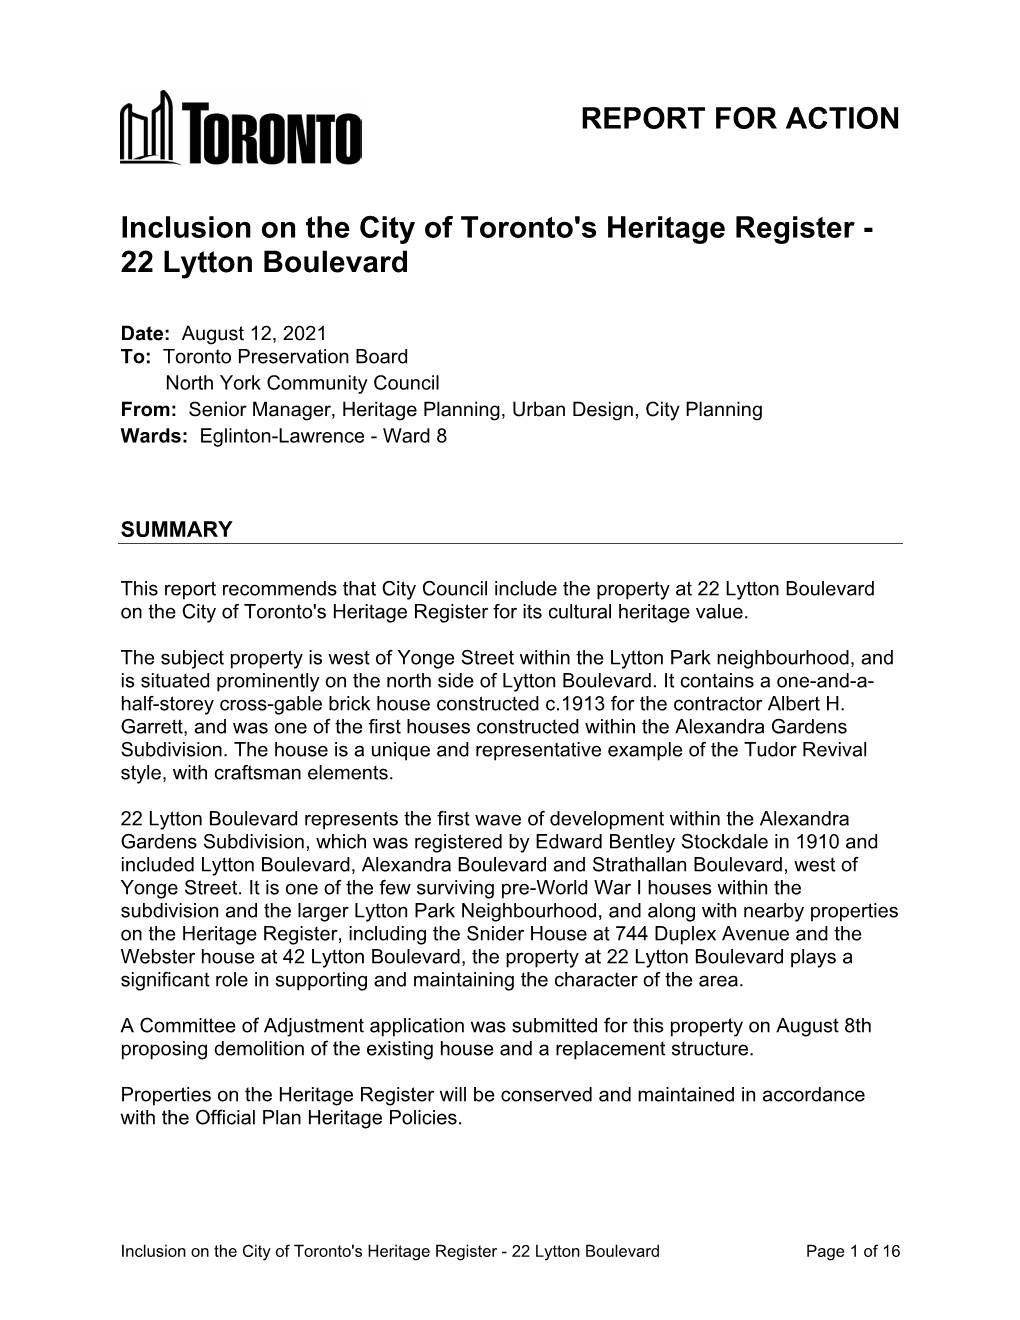 Inclusion on the City of Toronto's Heritage Register - 22 Lytton Boulevard